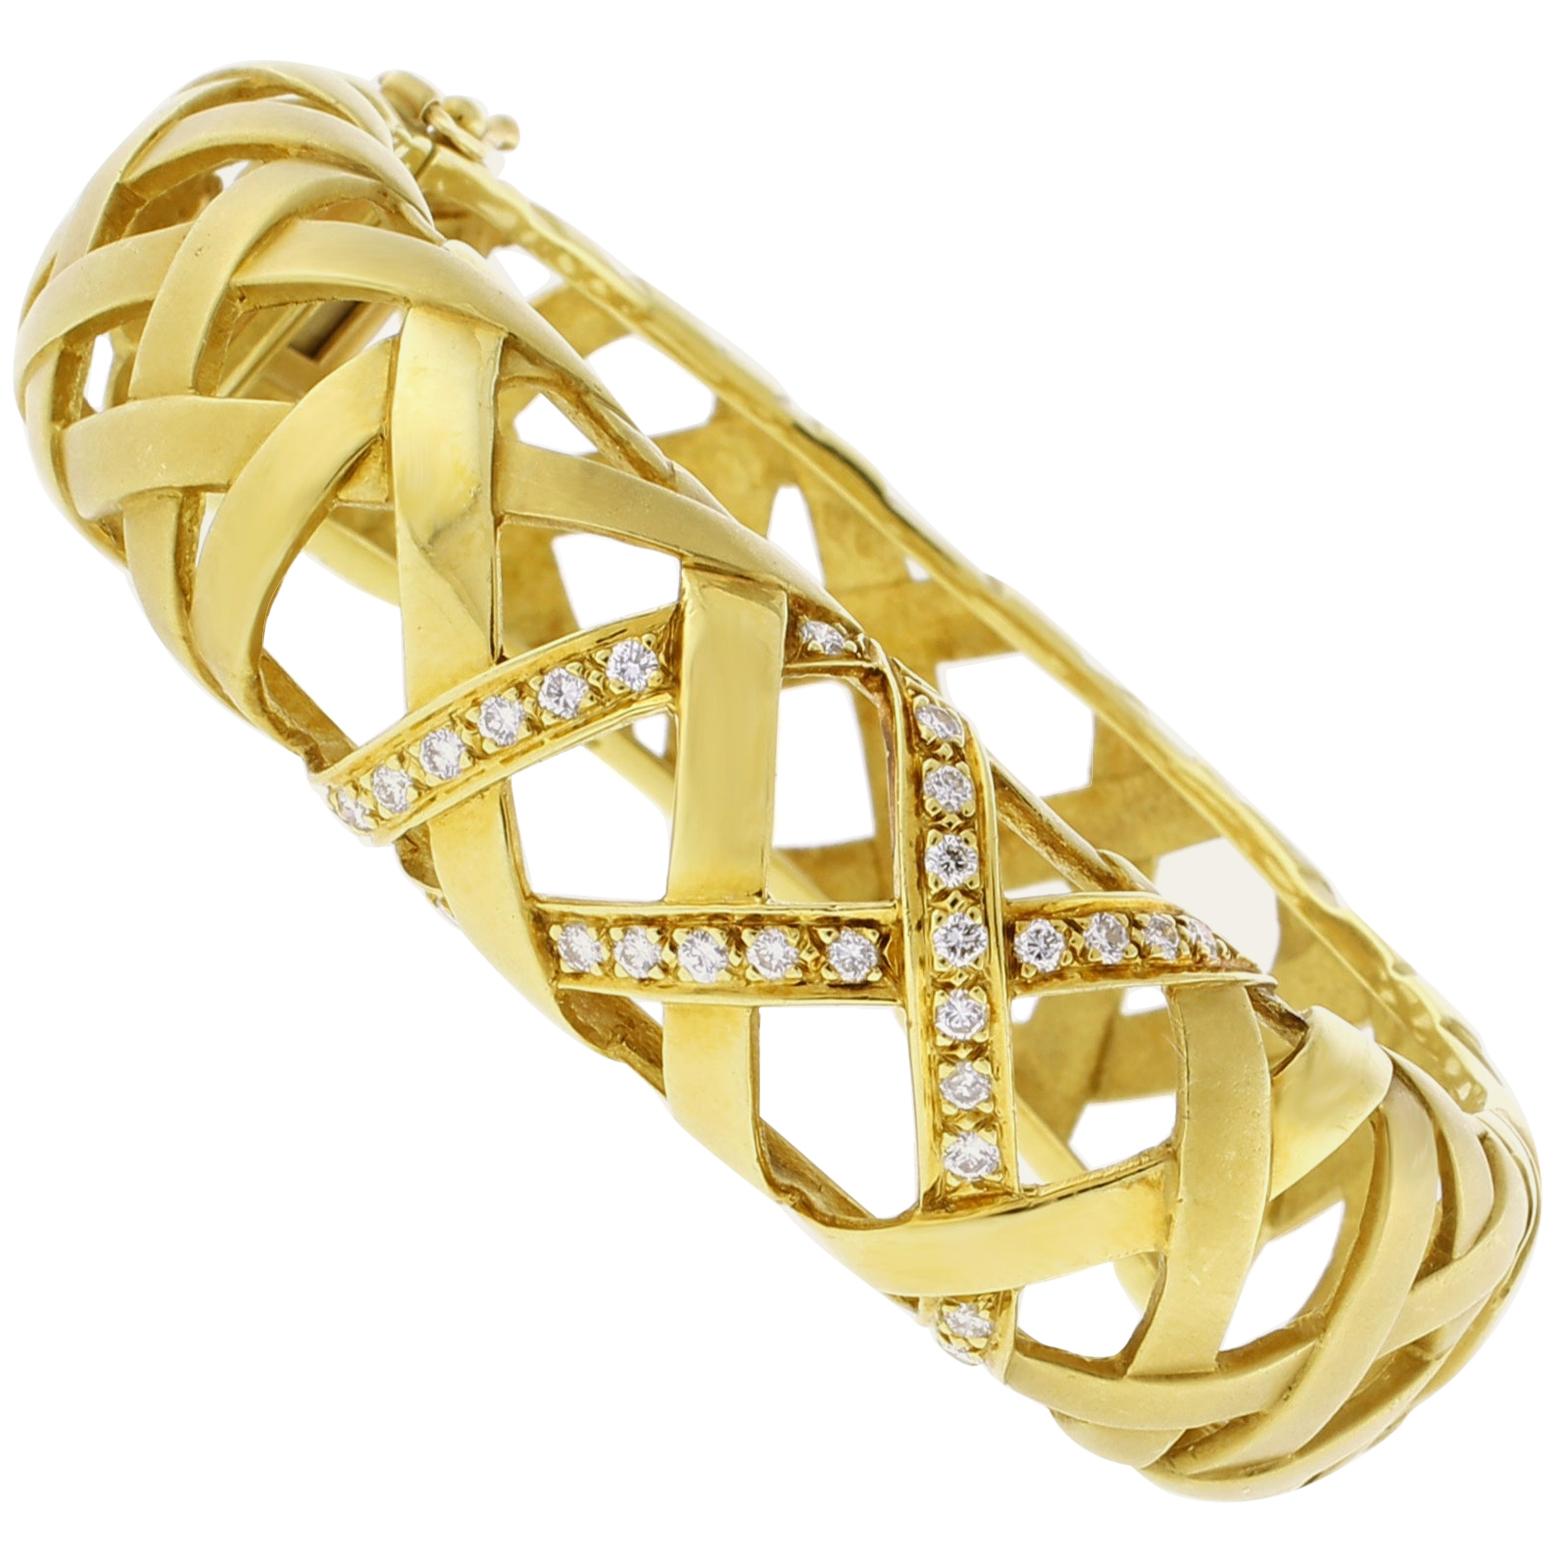 Marlene Stowe Crisscross Diamond Bangle Bracelet For Sale